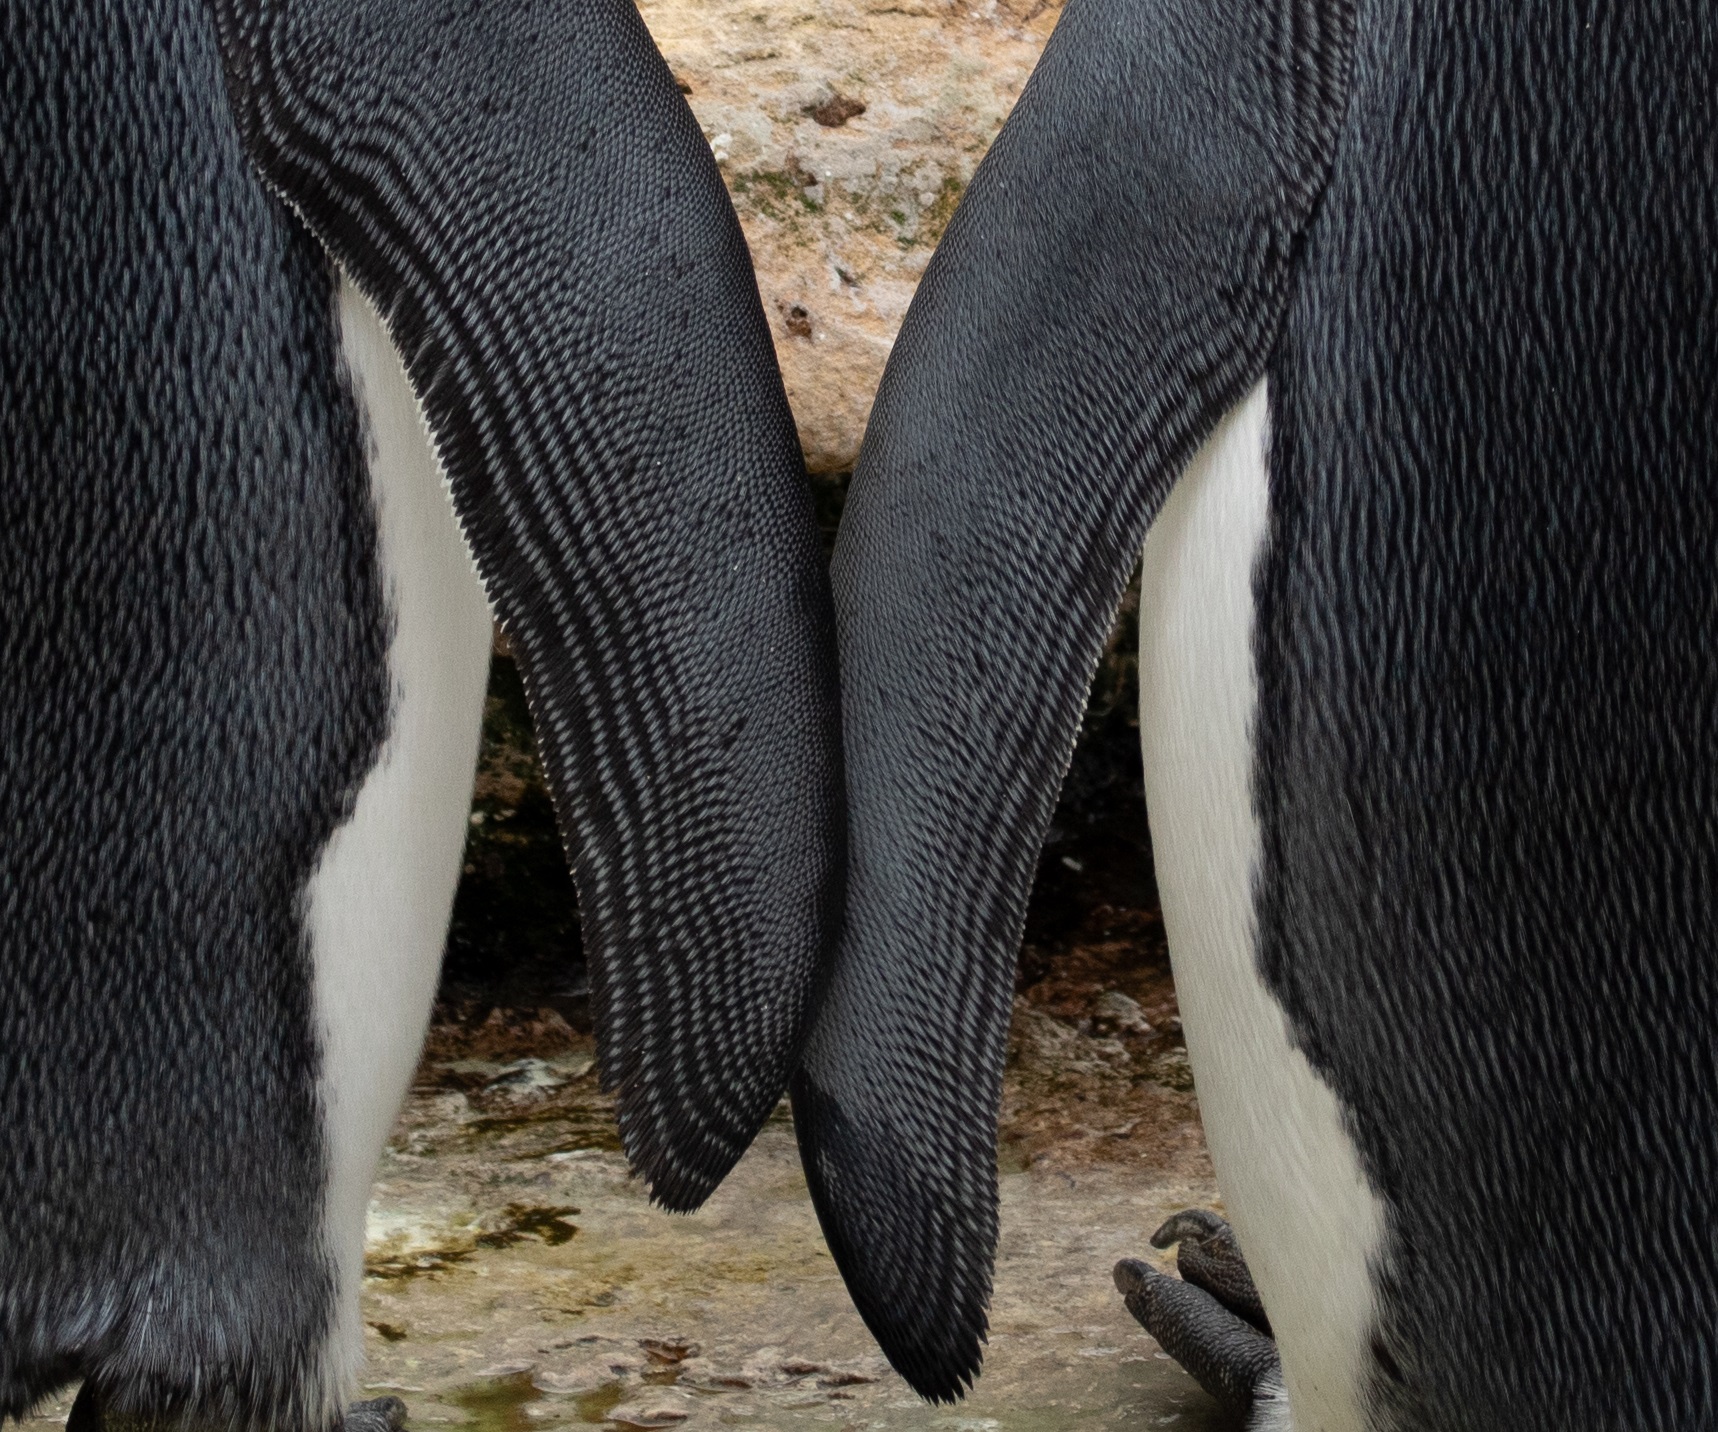 Penguin love2 7275 - Fond Farewell to one of Europe's oldest female King Penguins